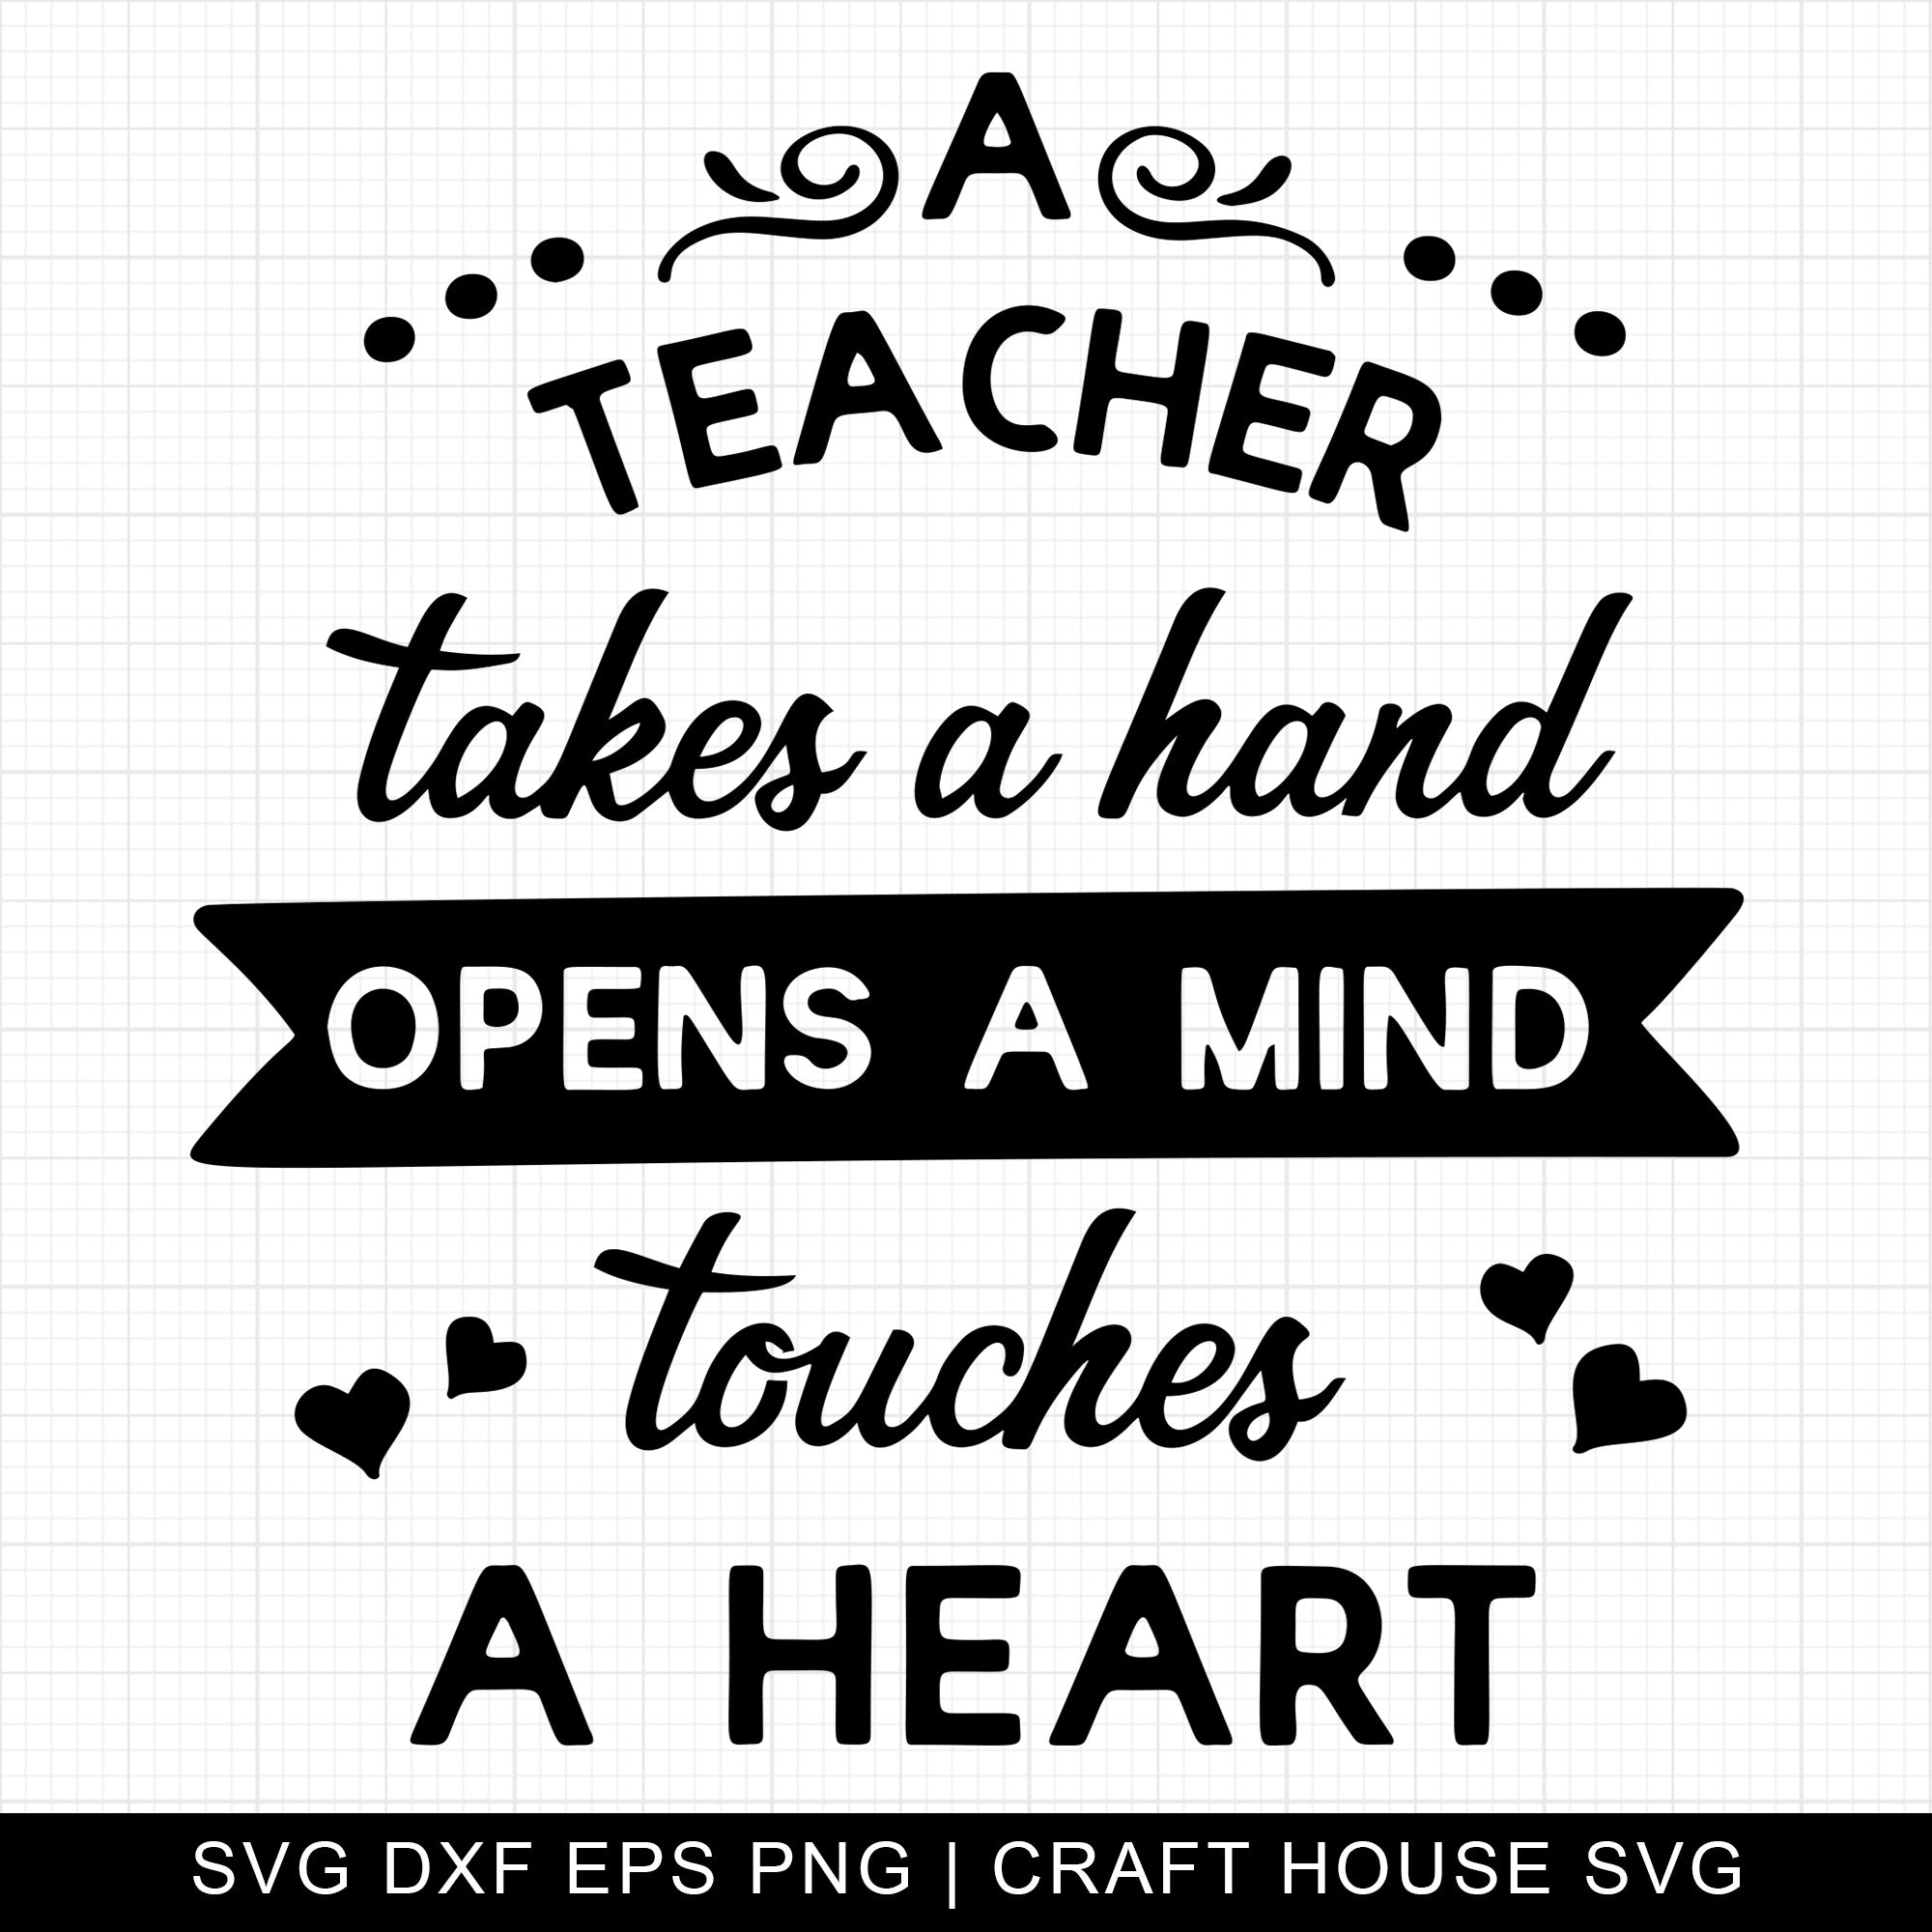 A Teacher Takes A Hand, Opens a Mind, Touches a Heart SVG